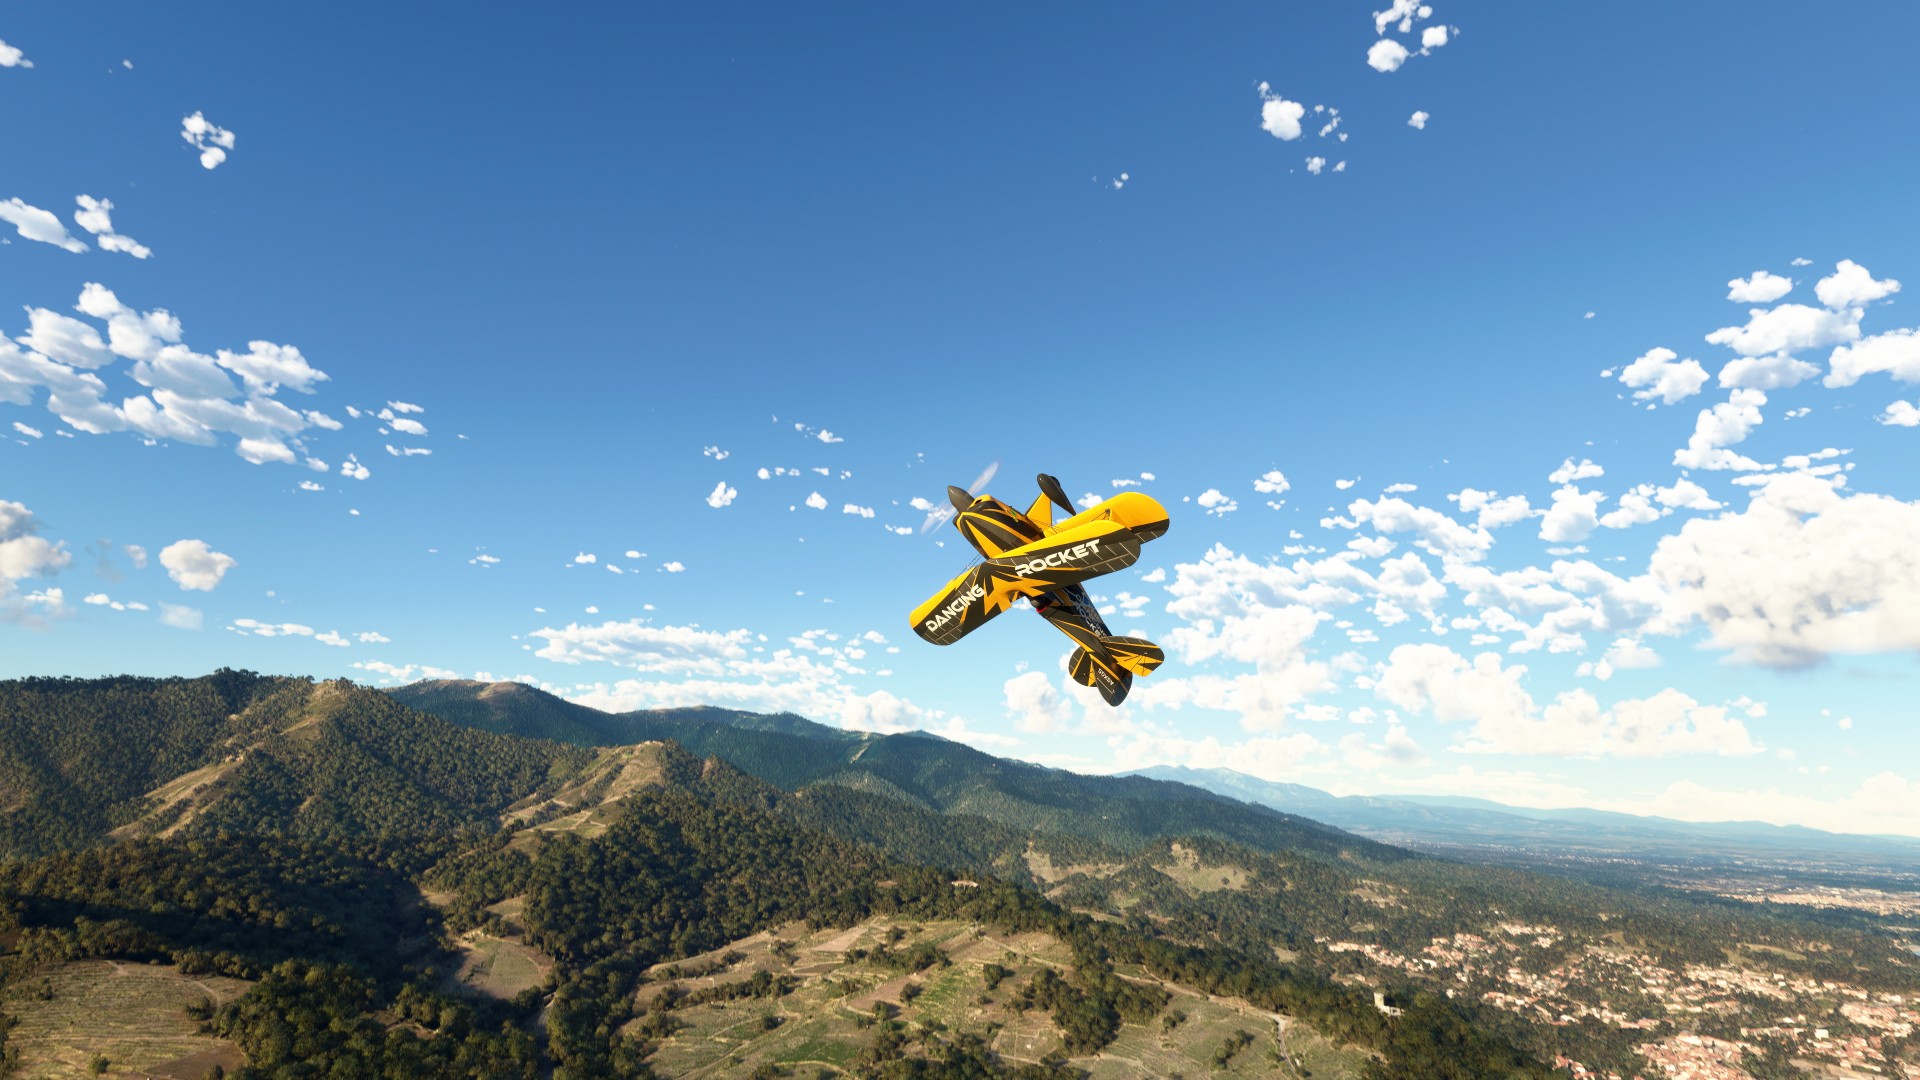 Microsoft Flight Simulator Game of the Year Edition